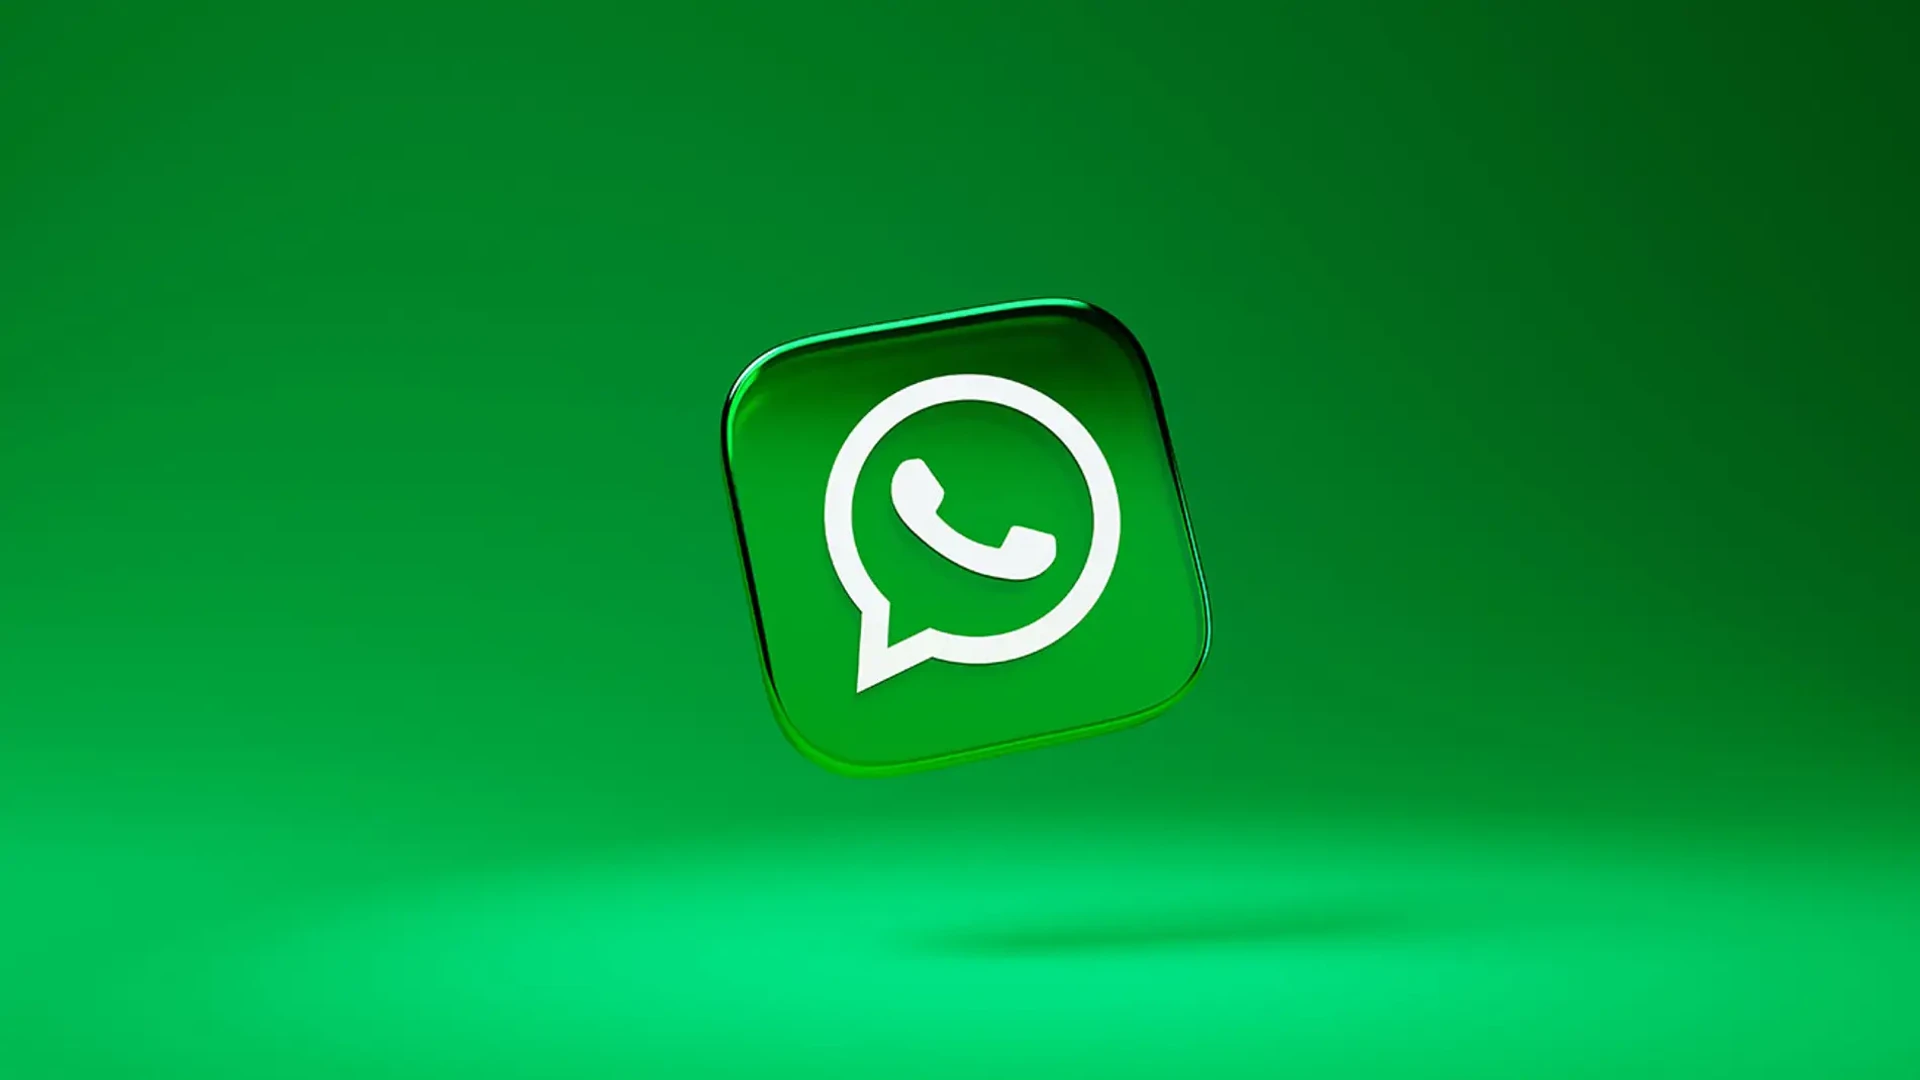 Logotipo de WhatsApp